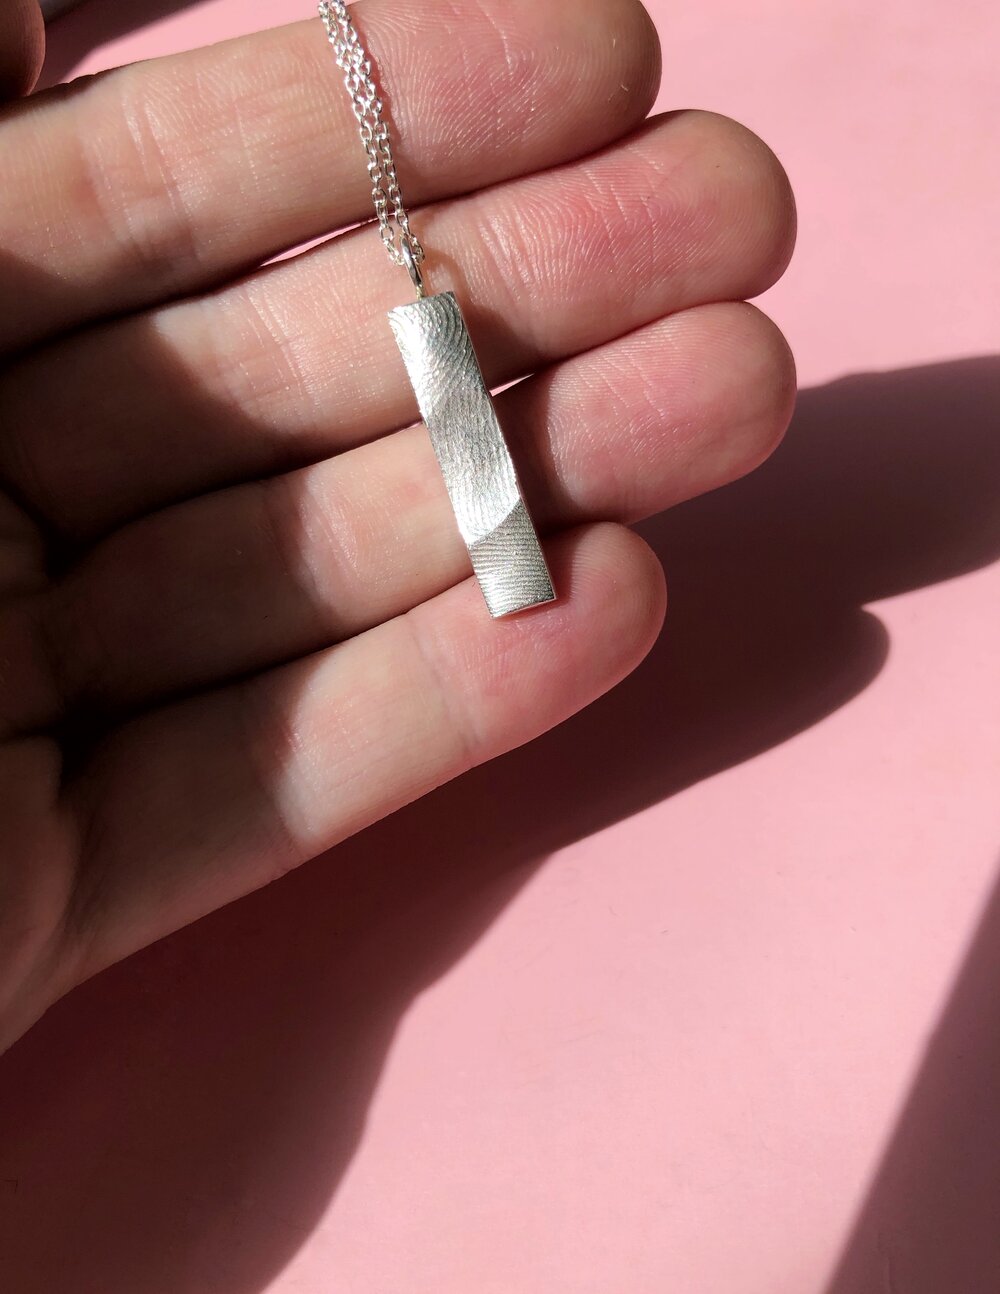 Family Bar Fingerprint Pendant - Sterling Silver - Fingerprint Impression Kit + Necklace